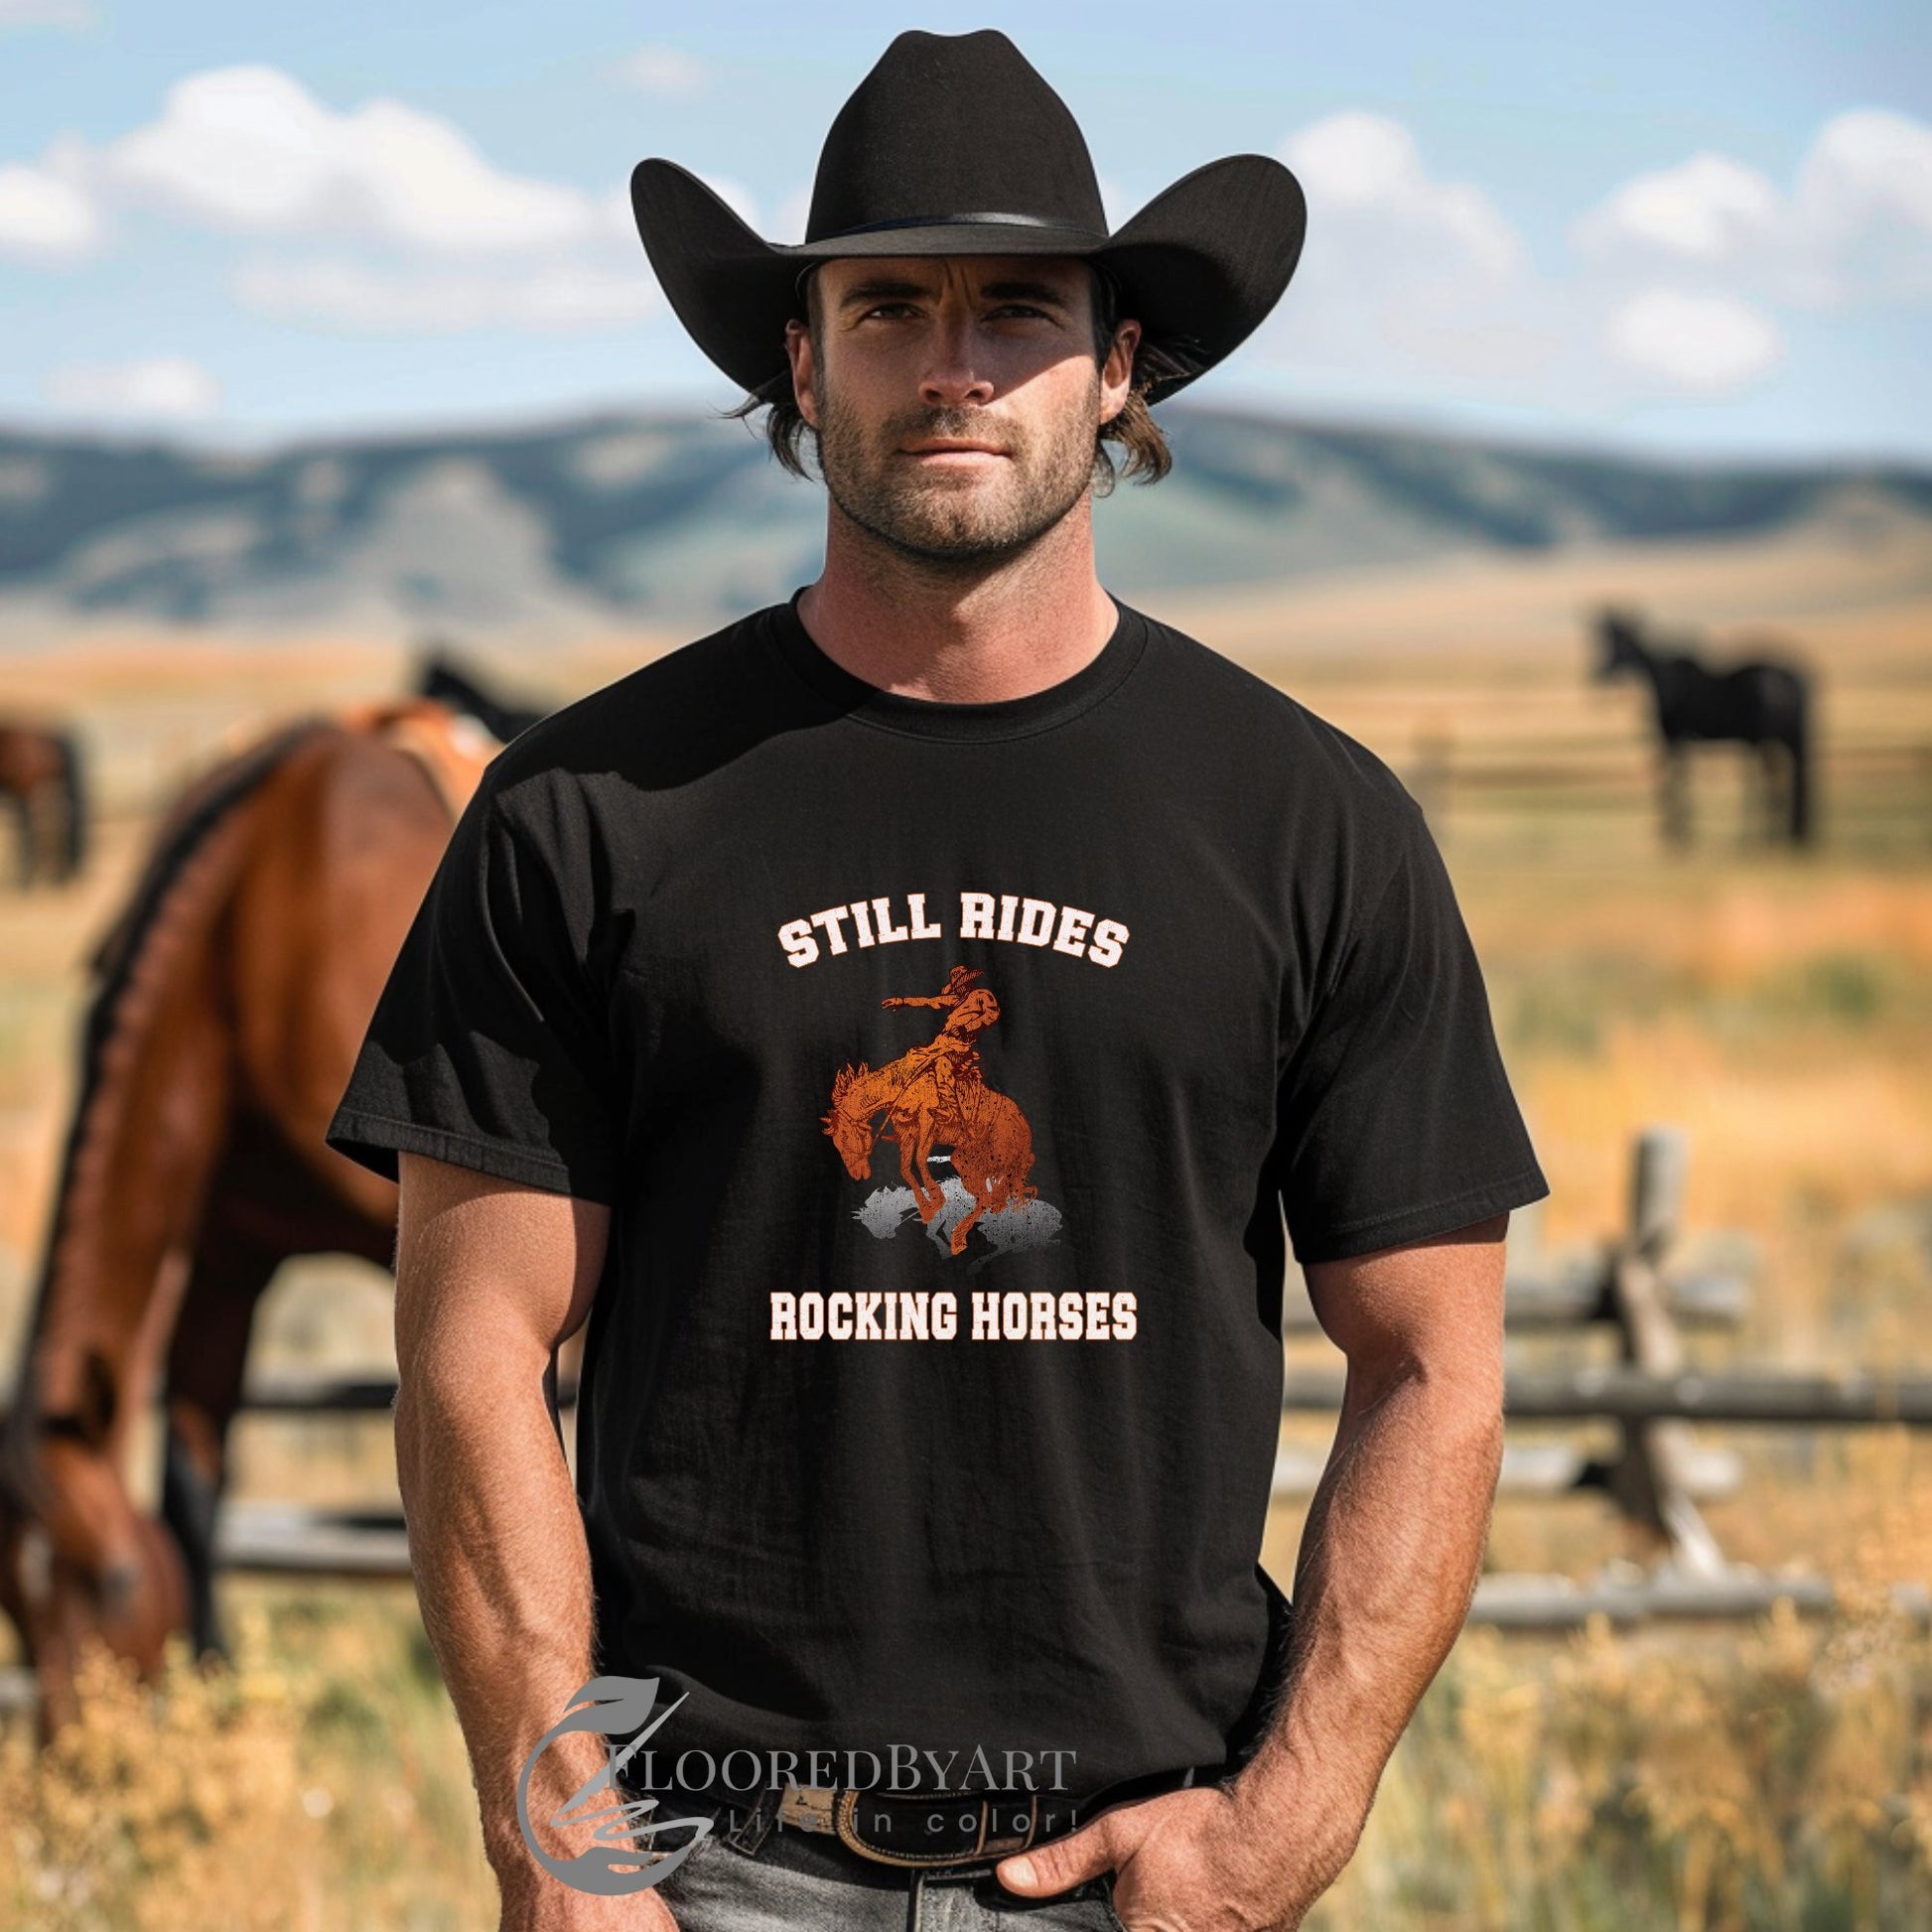 Funny Western Cowboy Graphic T-Shirt, Retro Style 90s Graphic Western Shirt - FlooredByArt